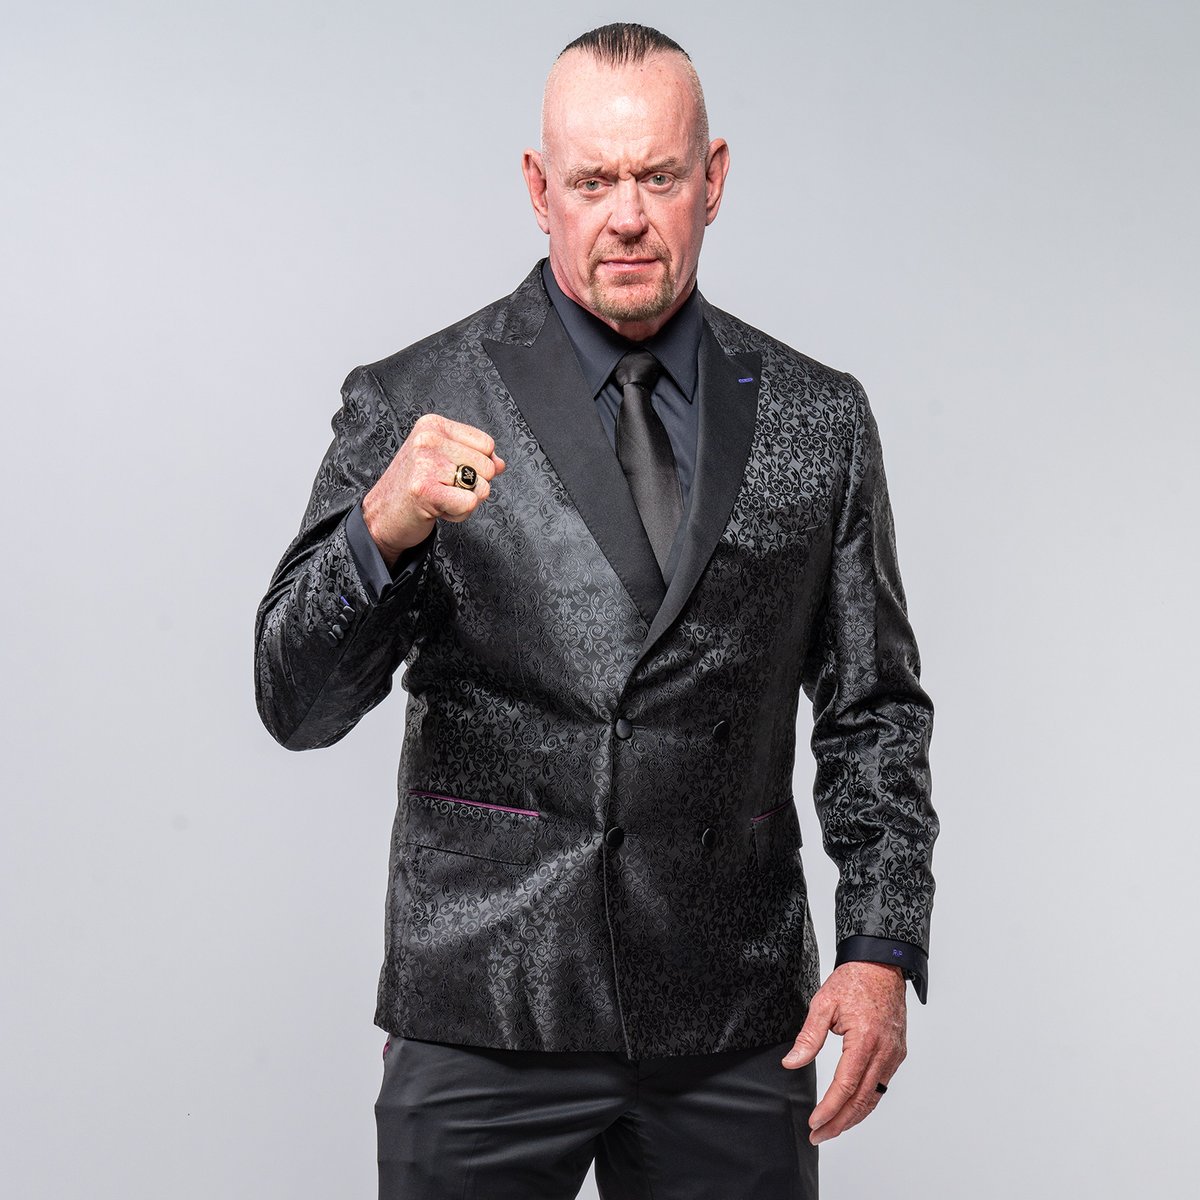 Happy birthday to the legendary, iconic WWE Hall of Famer @undertaker!